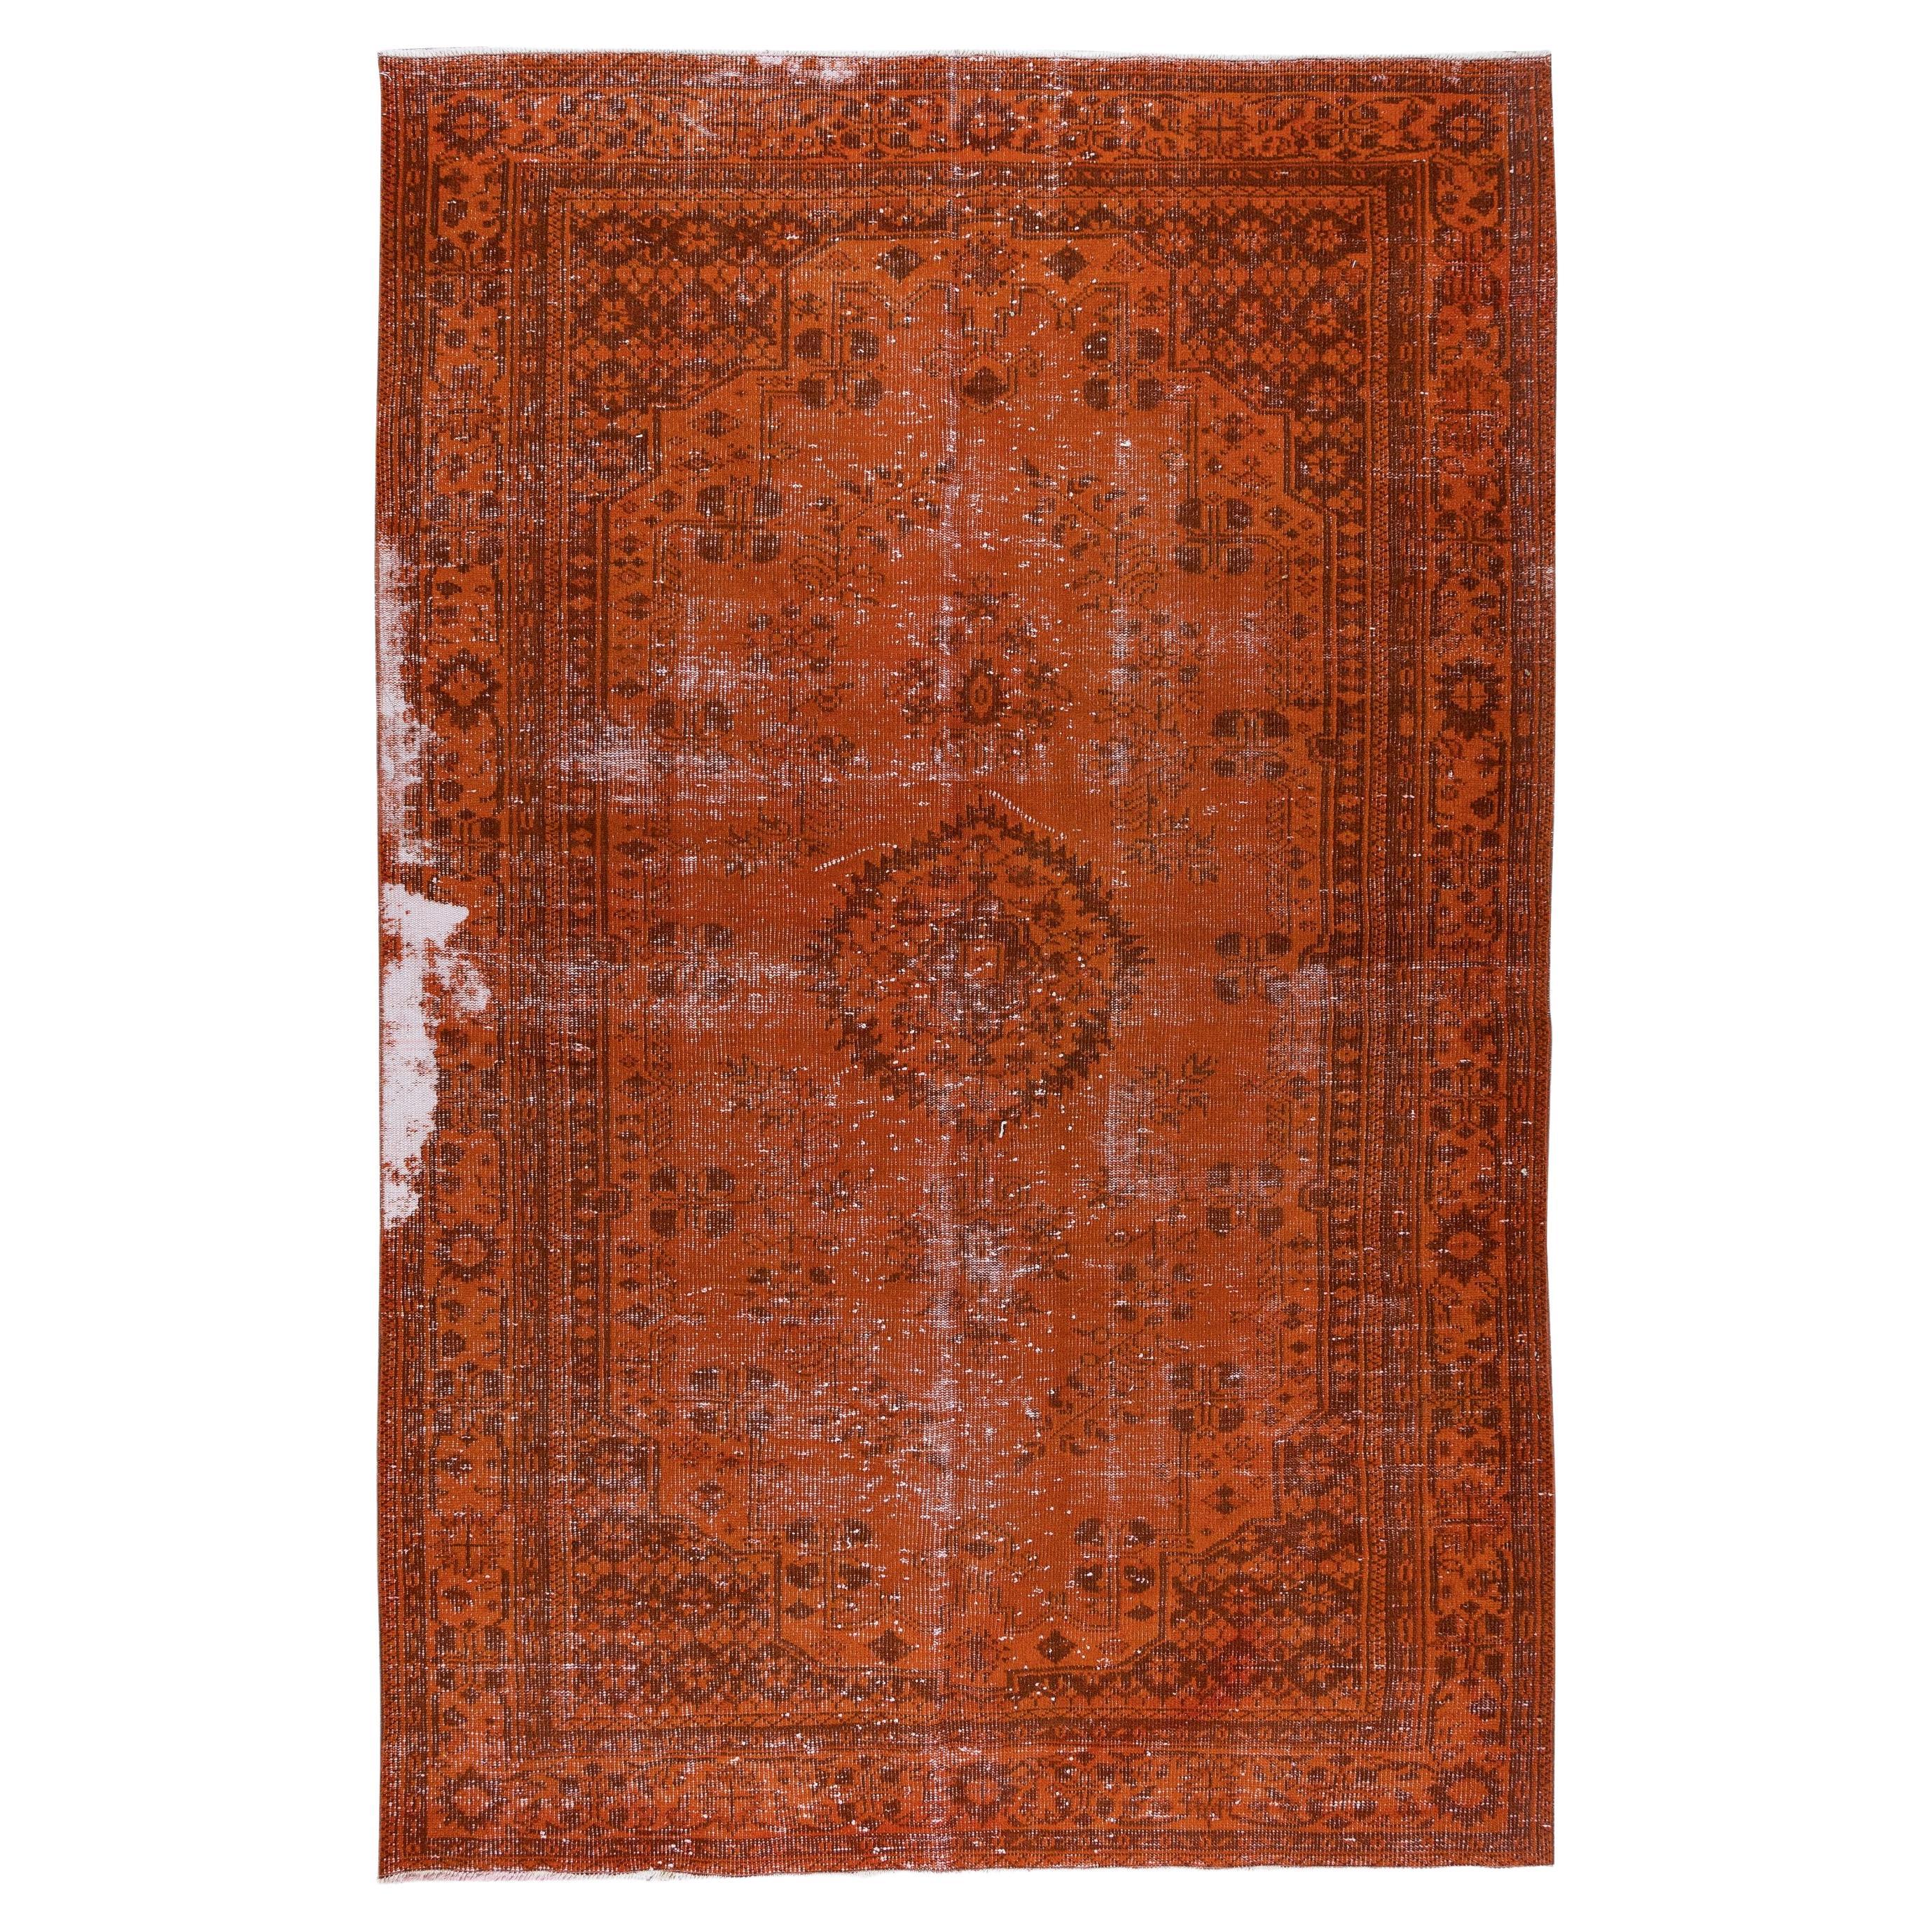 6.2x9.8 Ft Orange Vintage Handmade Turkish Wool Rug, Distressed Modern Carpet